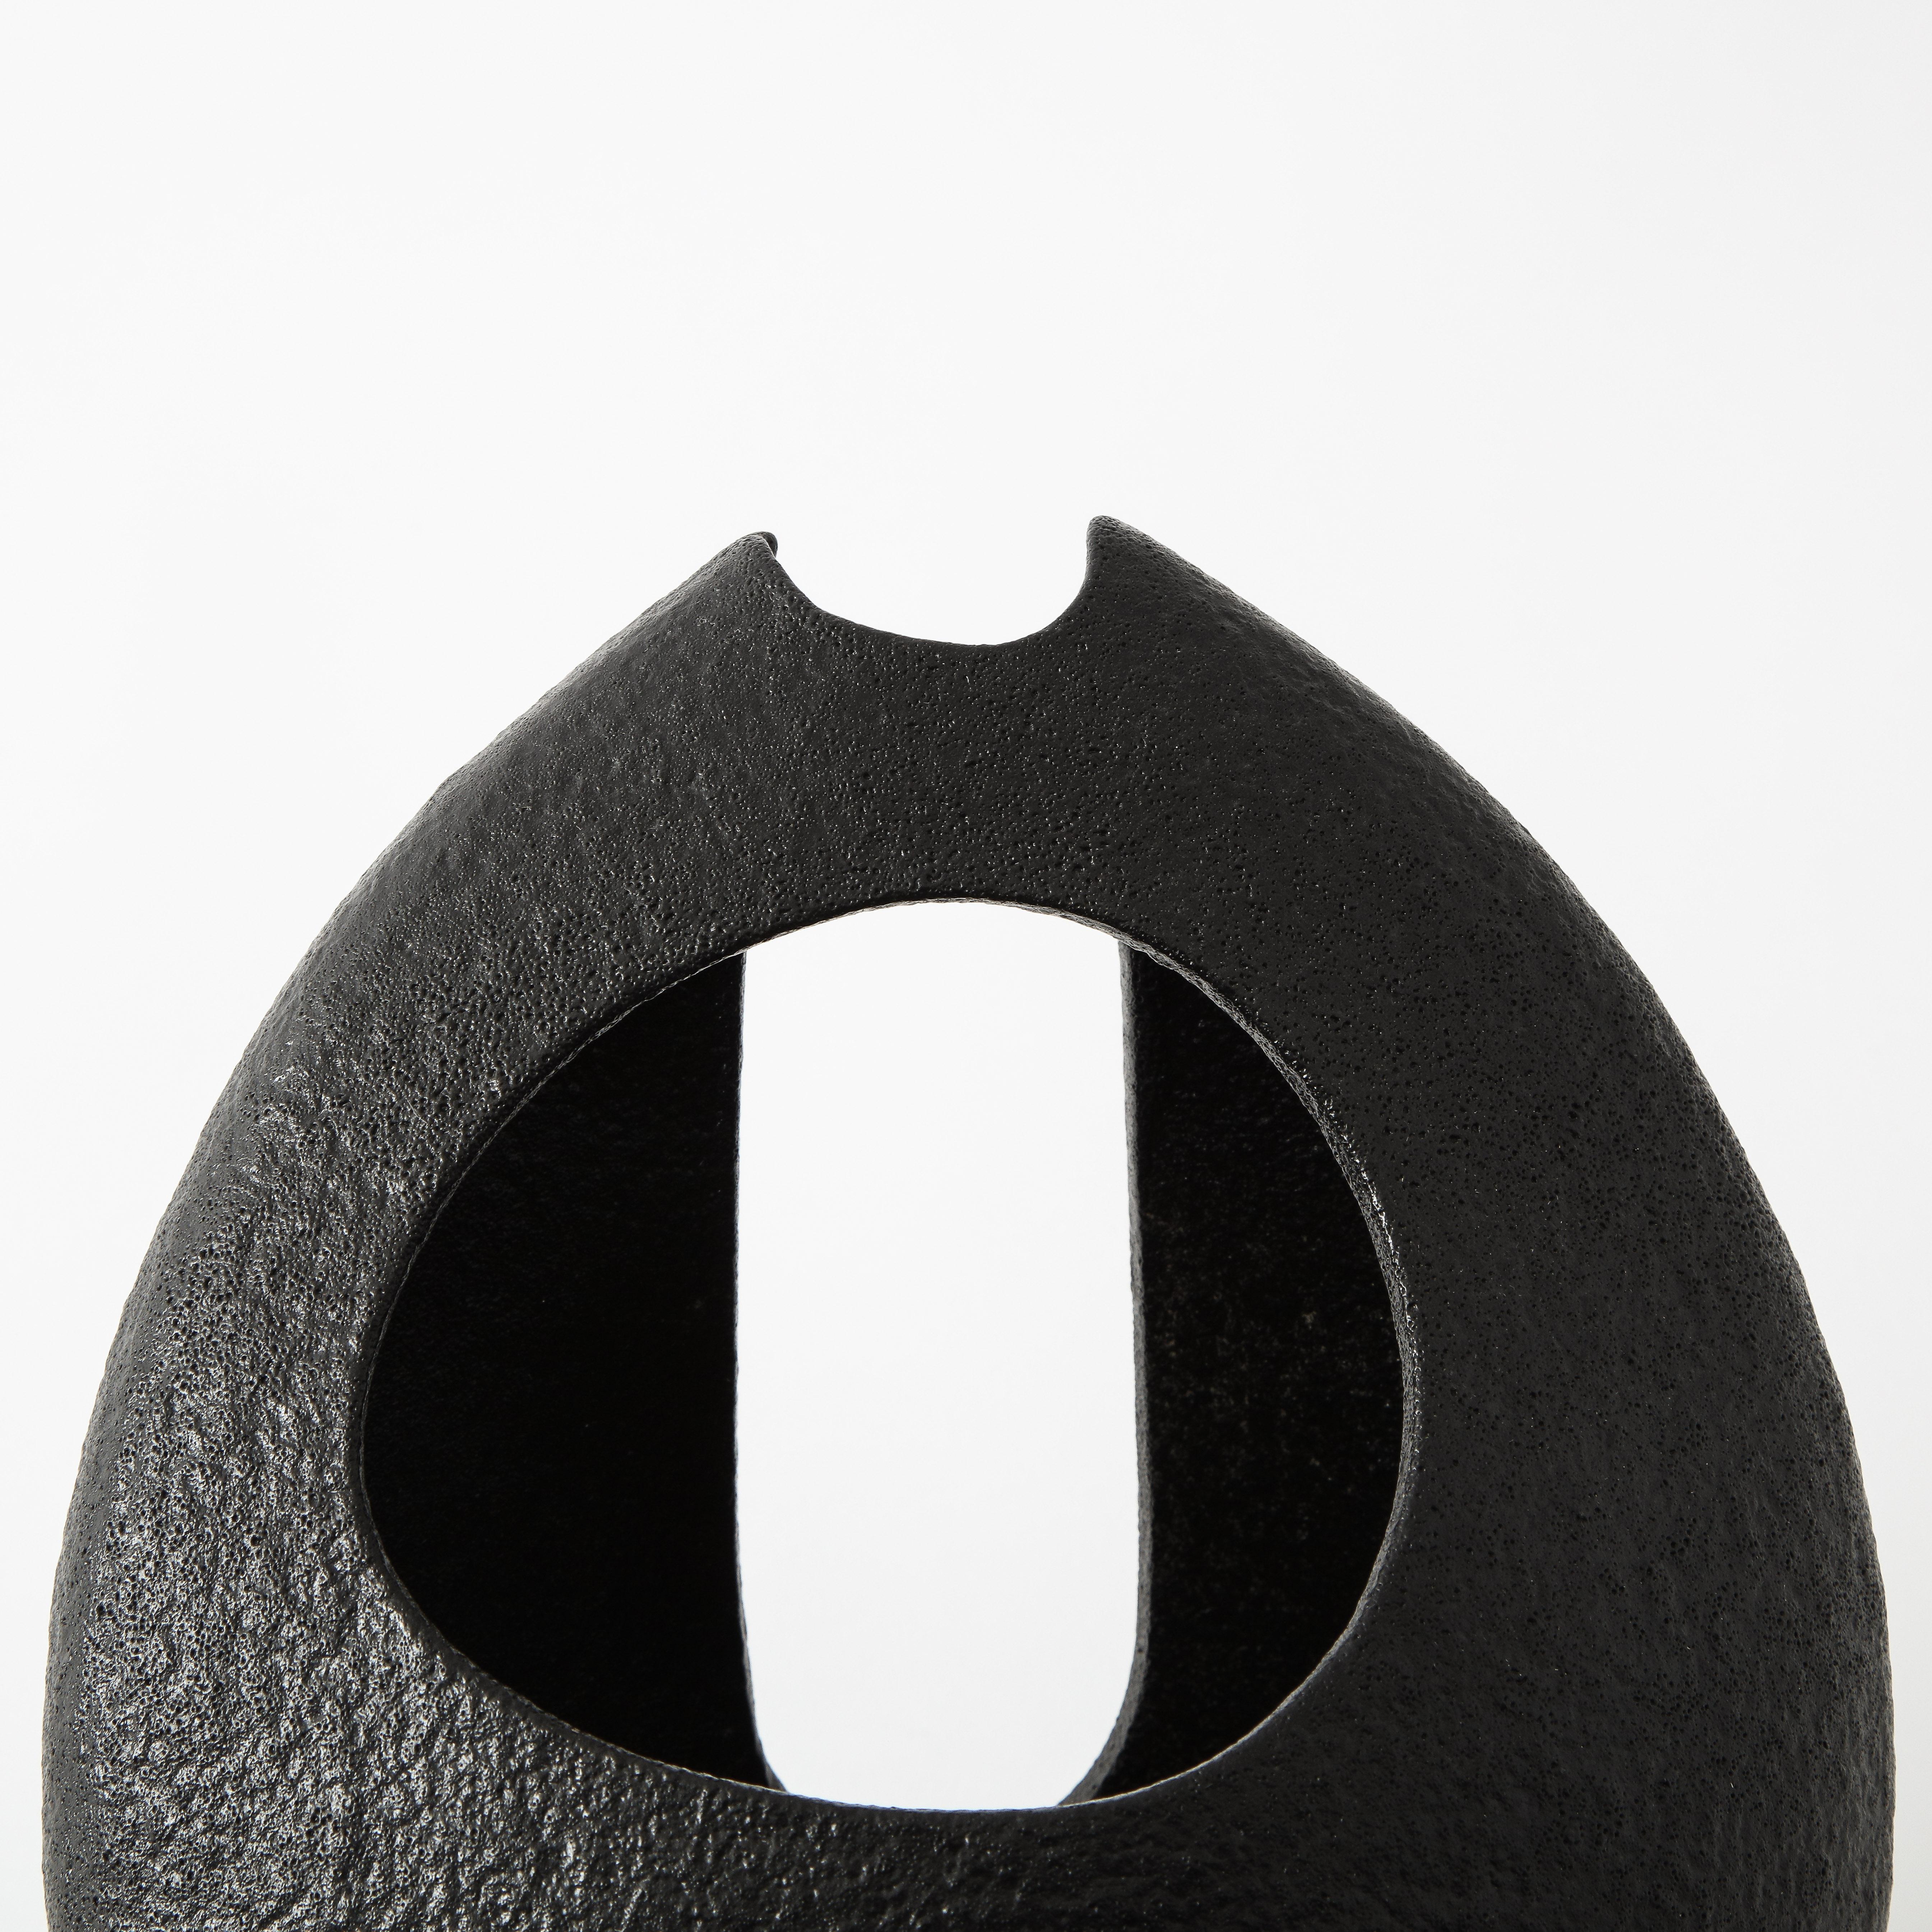 Asymmetrical Almond-Shaped Black Textured Japanese Ceramic Vessel 4